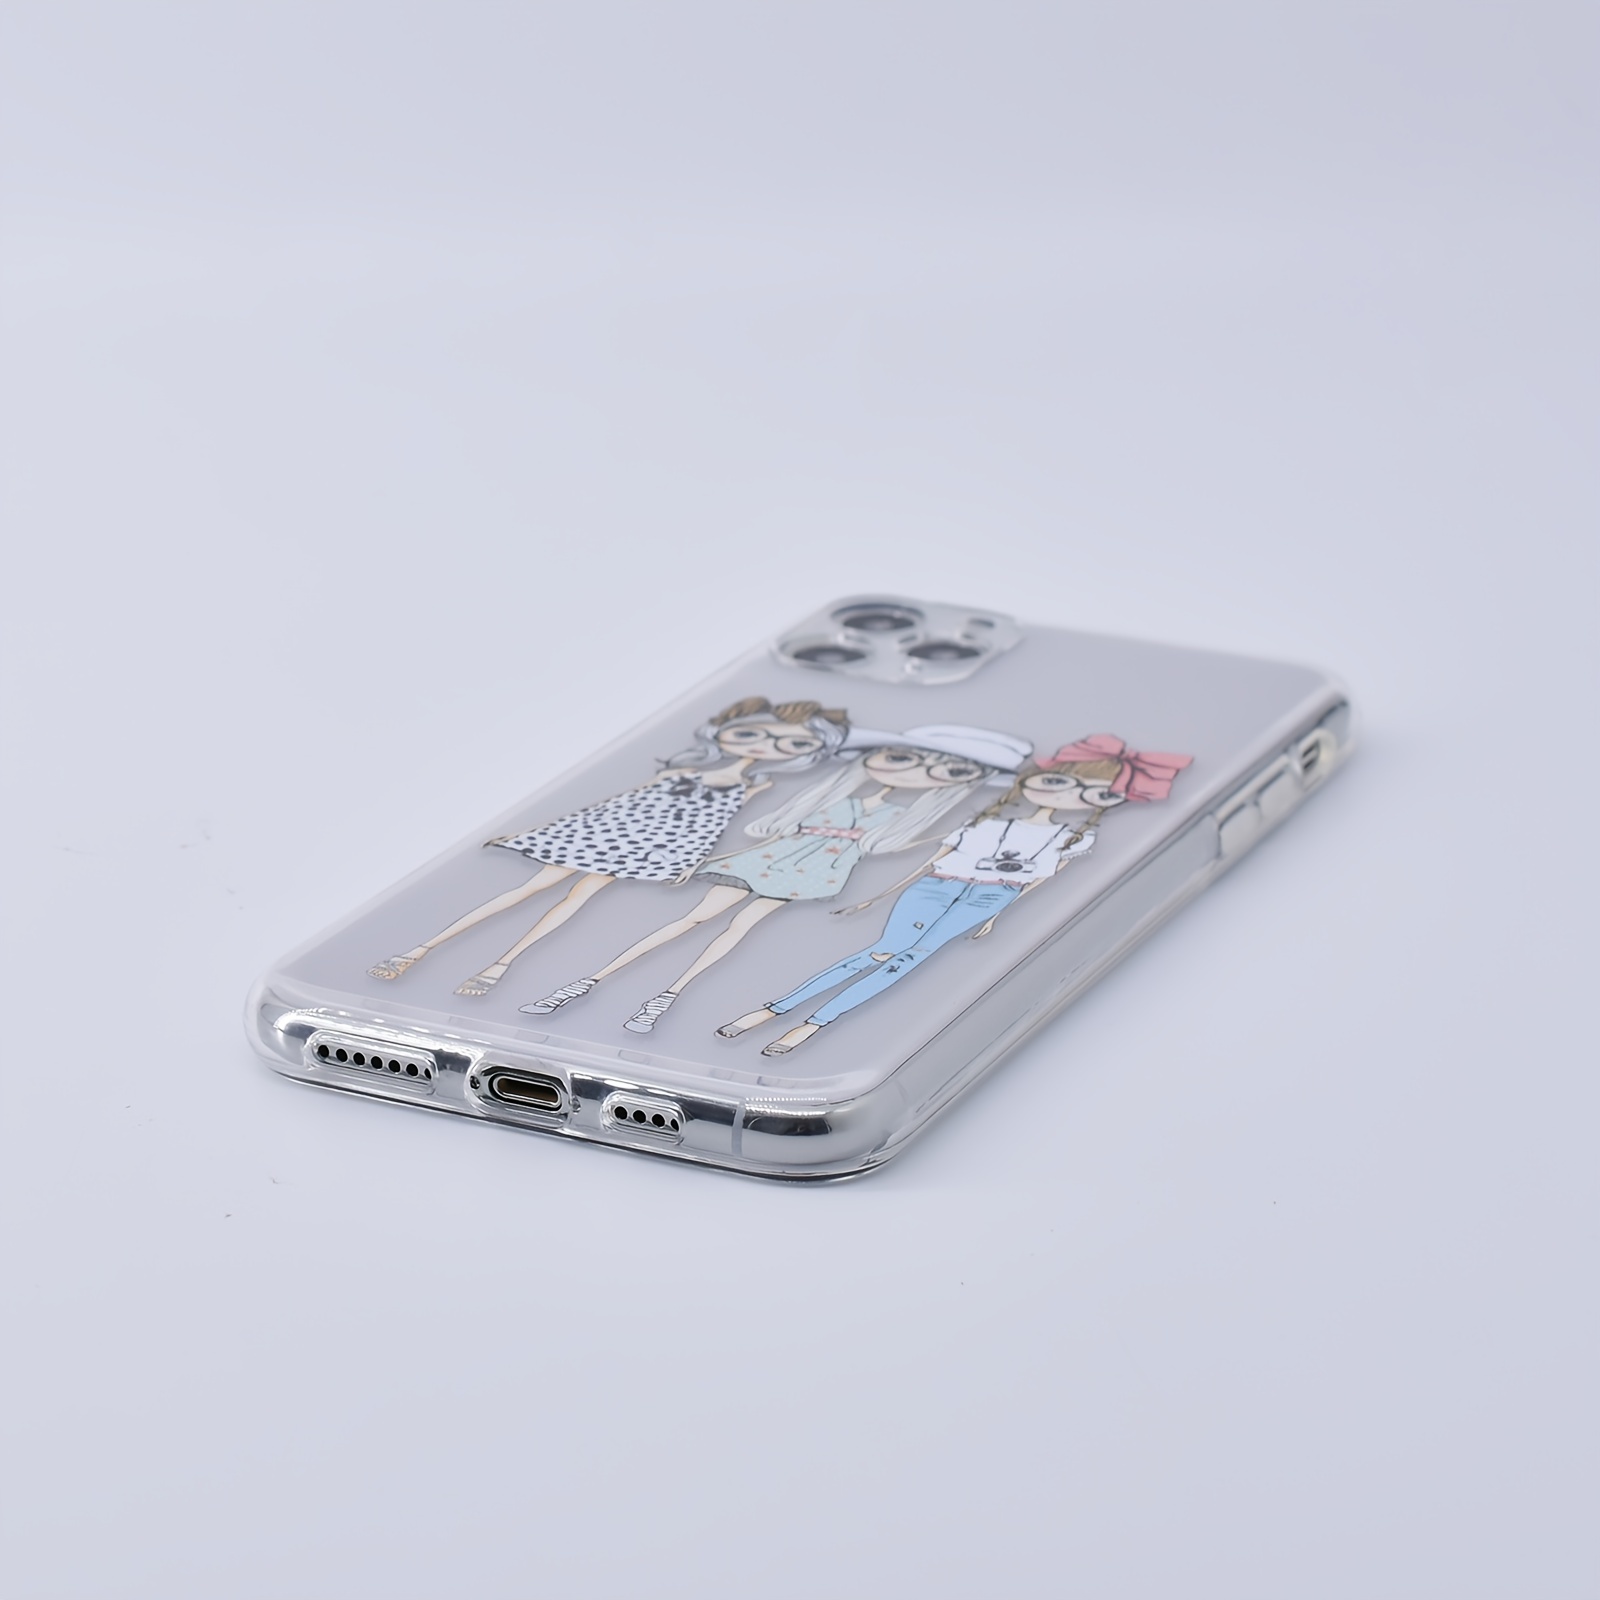 Carcasa Transparente iPhone XS Max